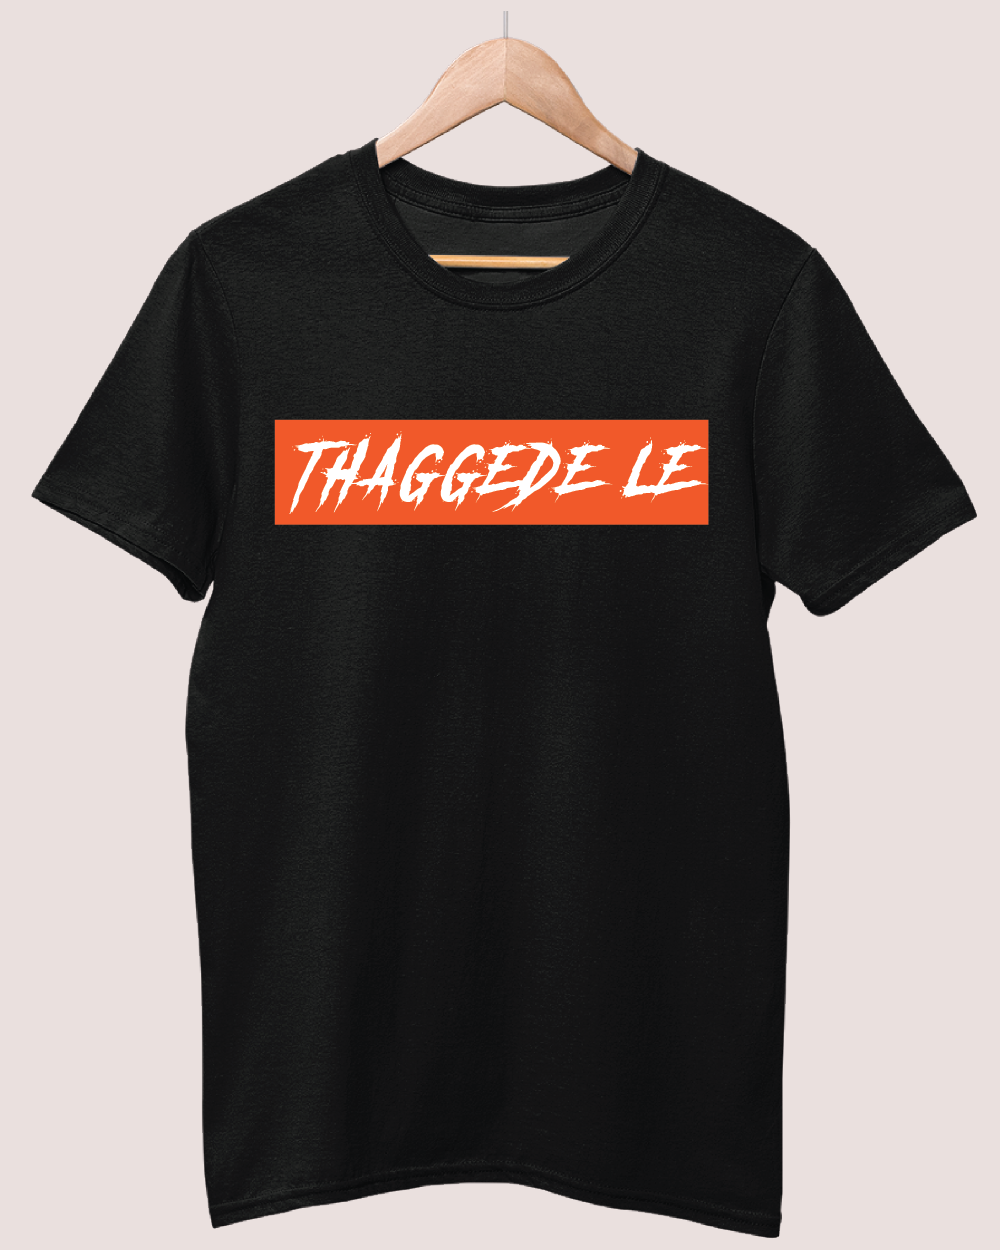 Thaggede Le T-shirt